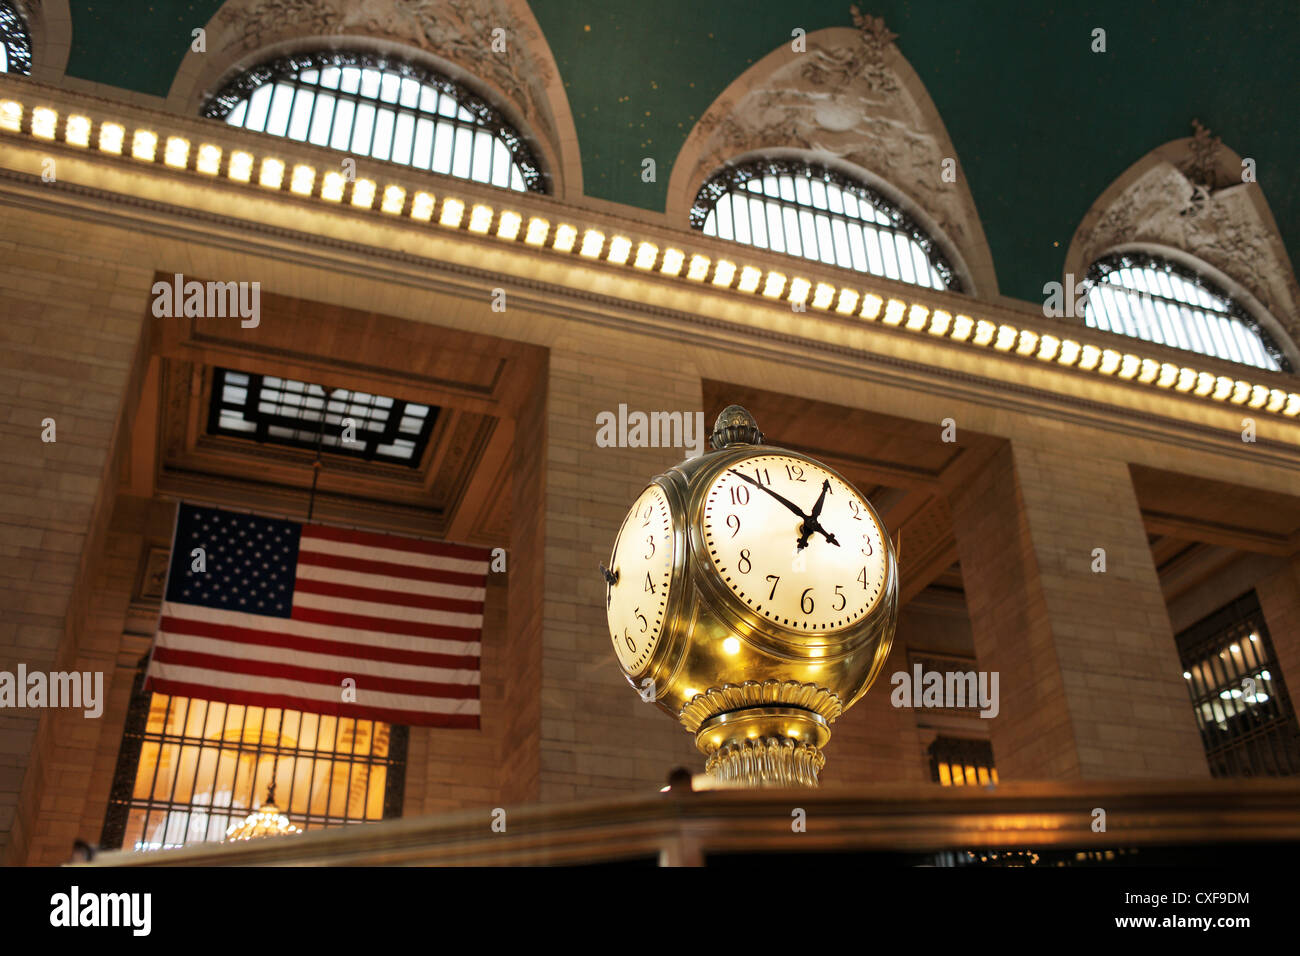 Uhr am Grand Central Terminal Railway Station, New York City, USA. Stockfoto